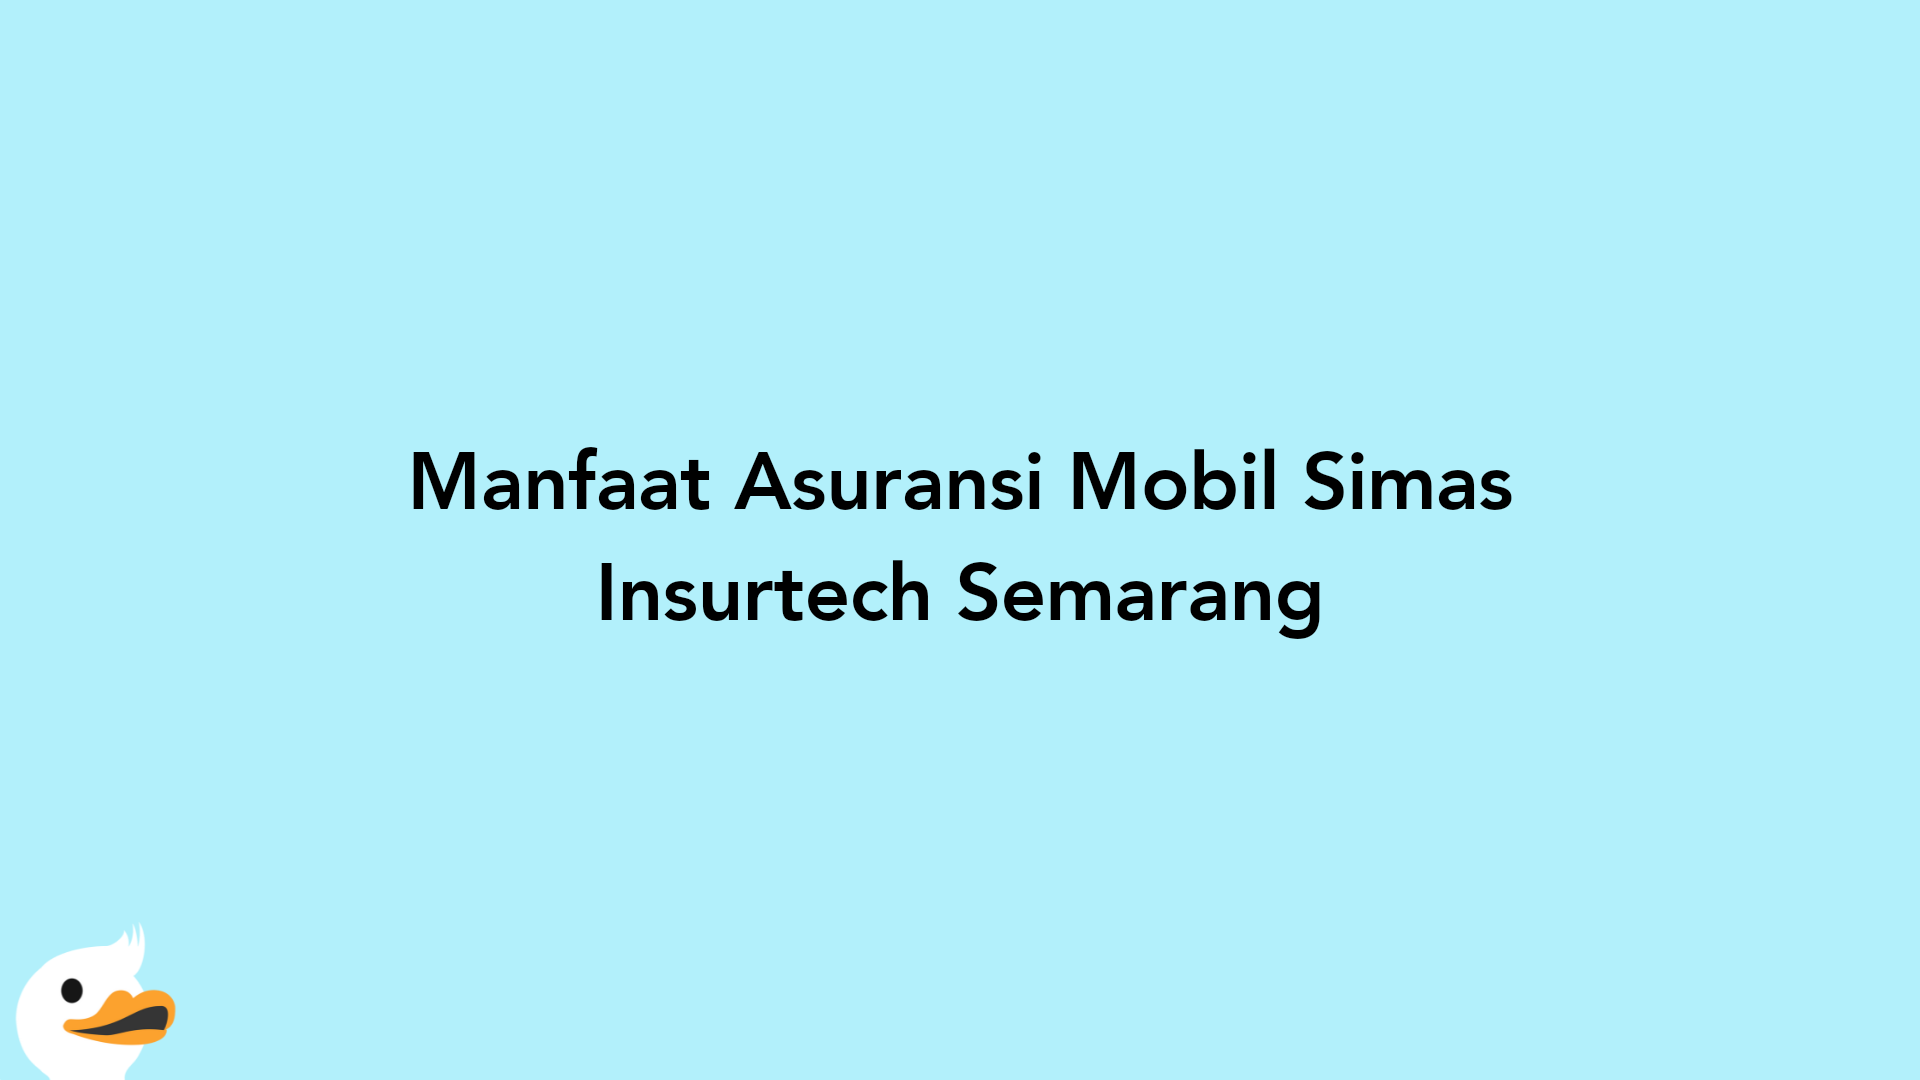 Manfaat Asuransi Mobil Simas Insurtech Semarang